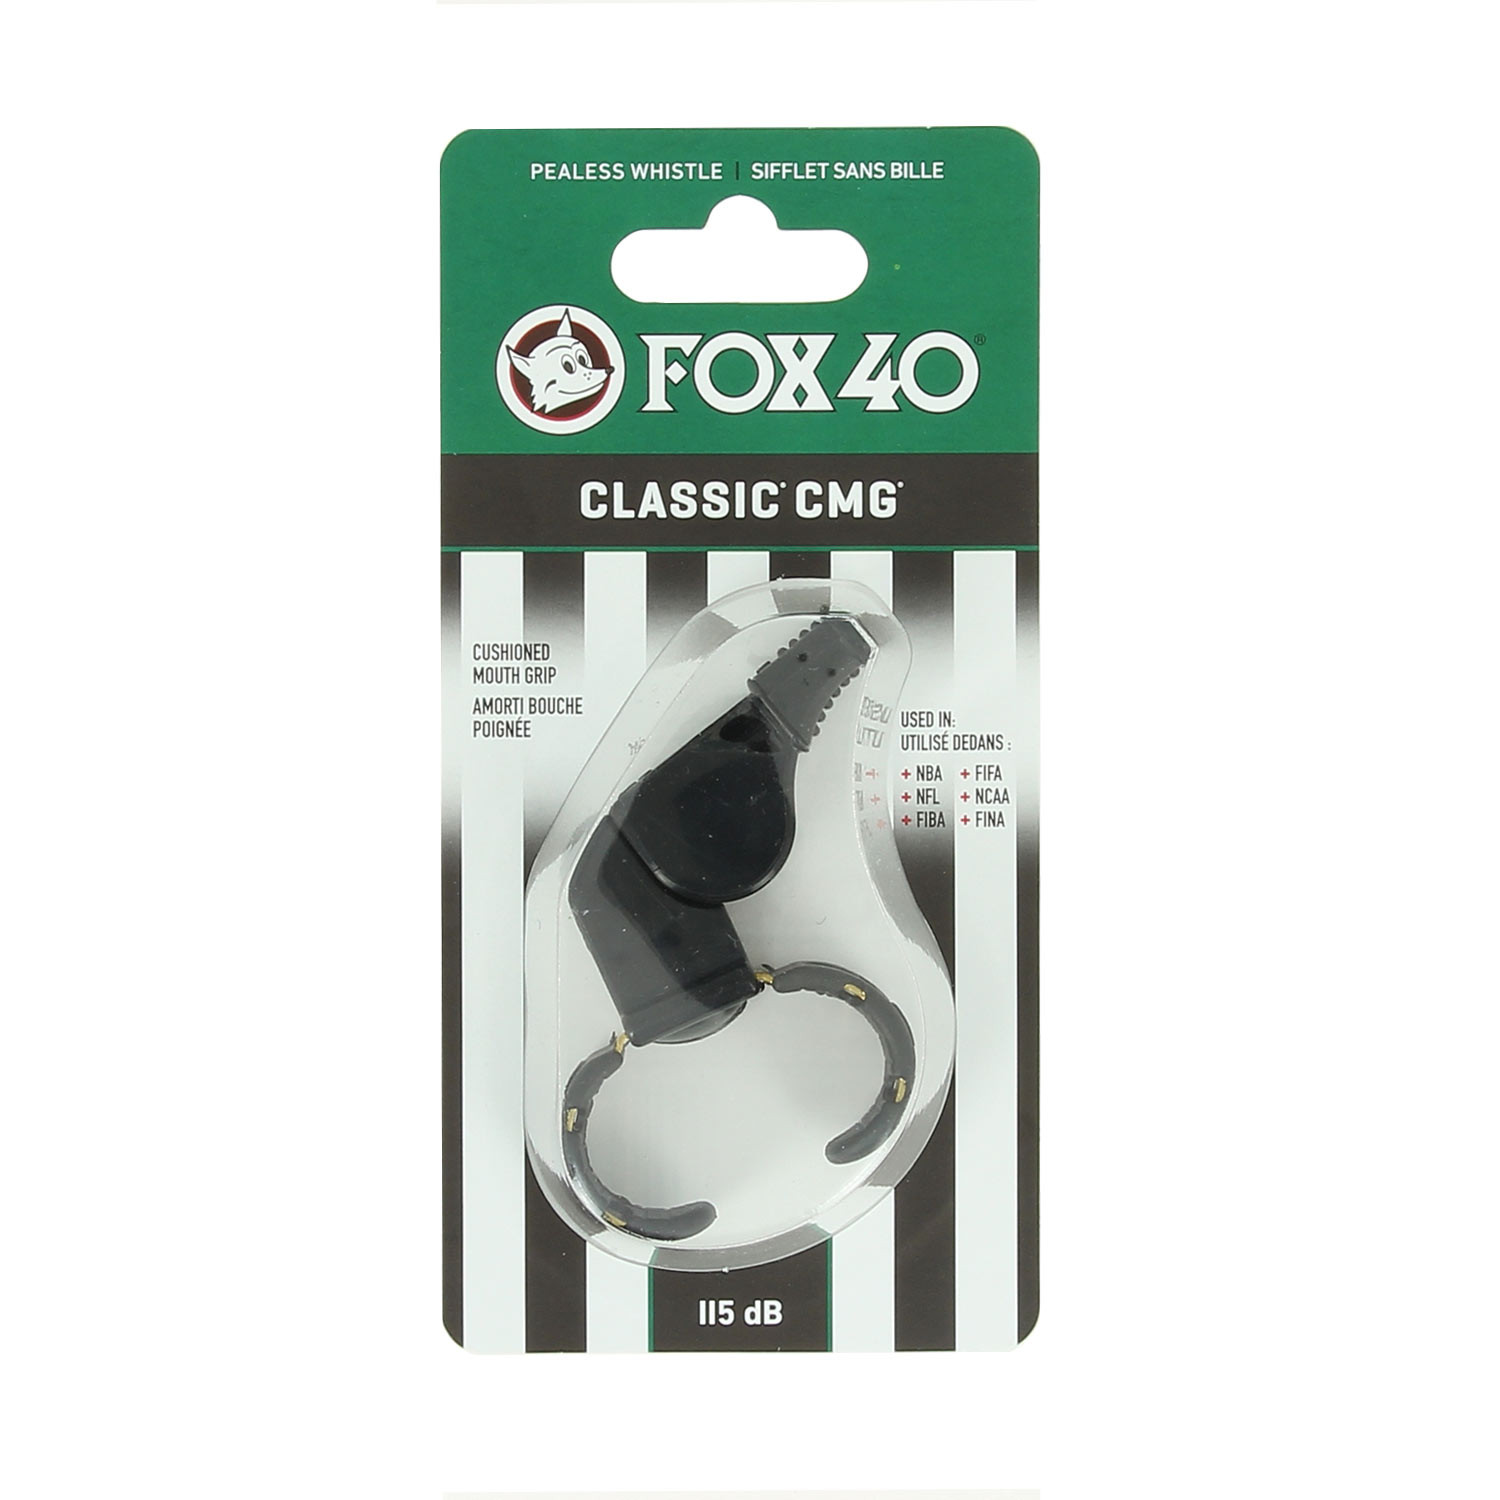 Silbato clásico Fox 40, Clásico